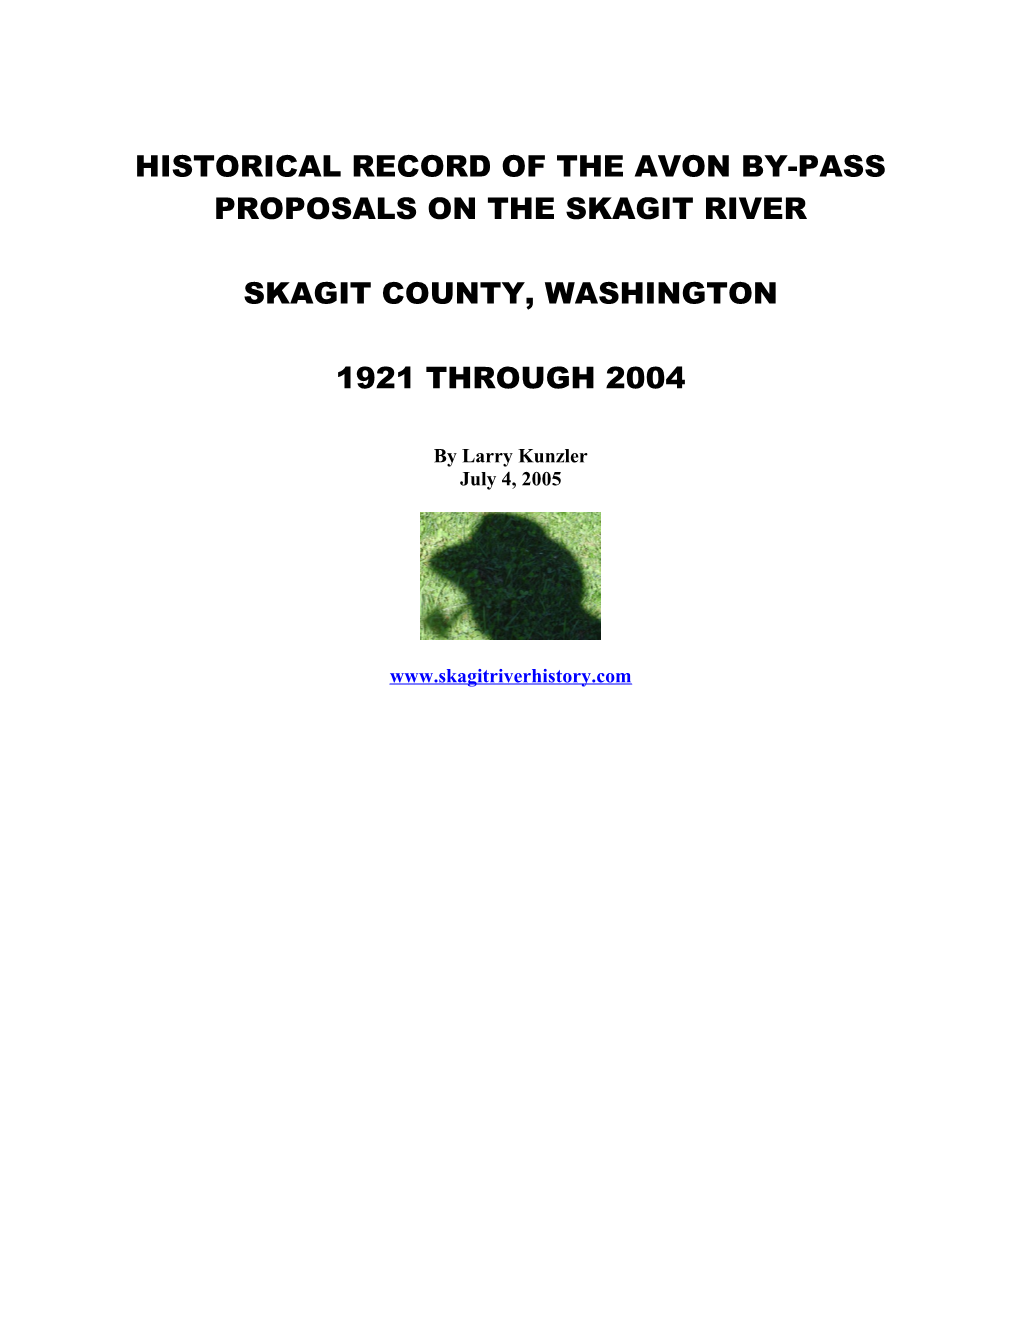 Historical Floods of the Skagit River